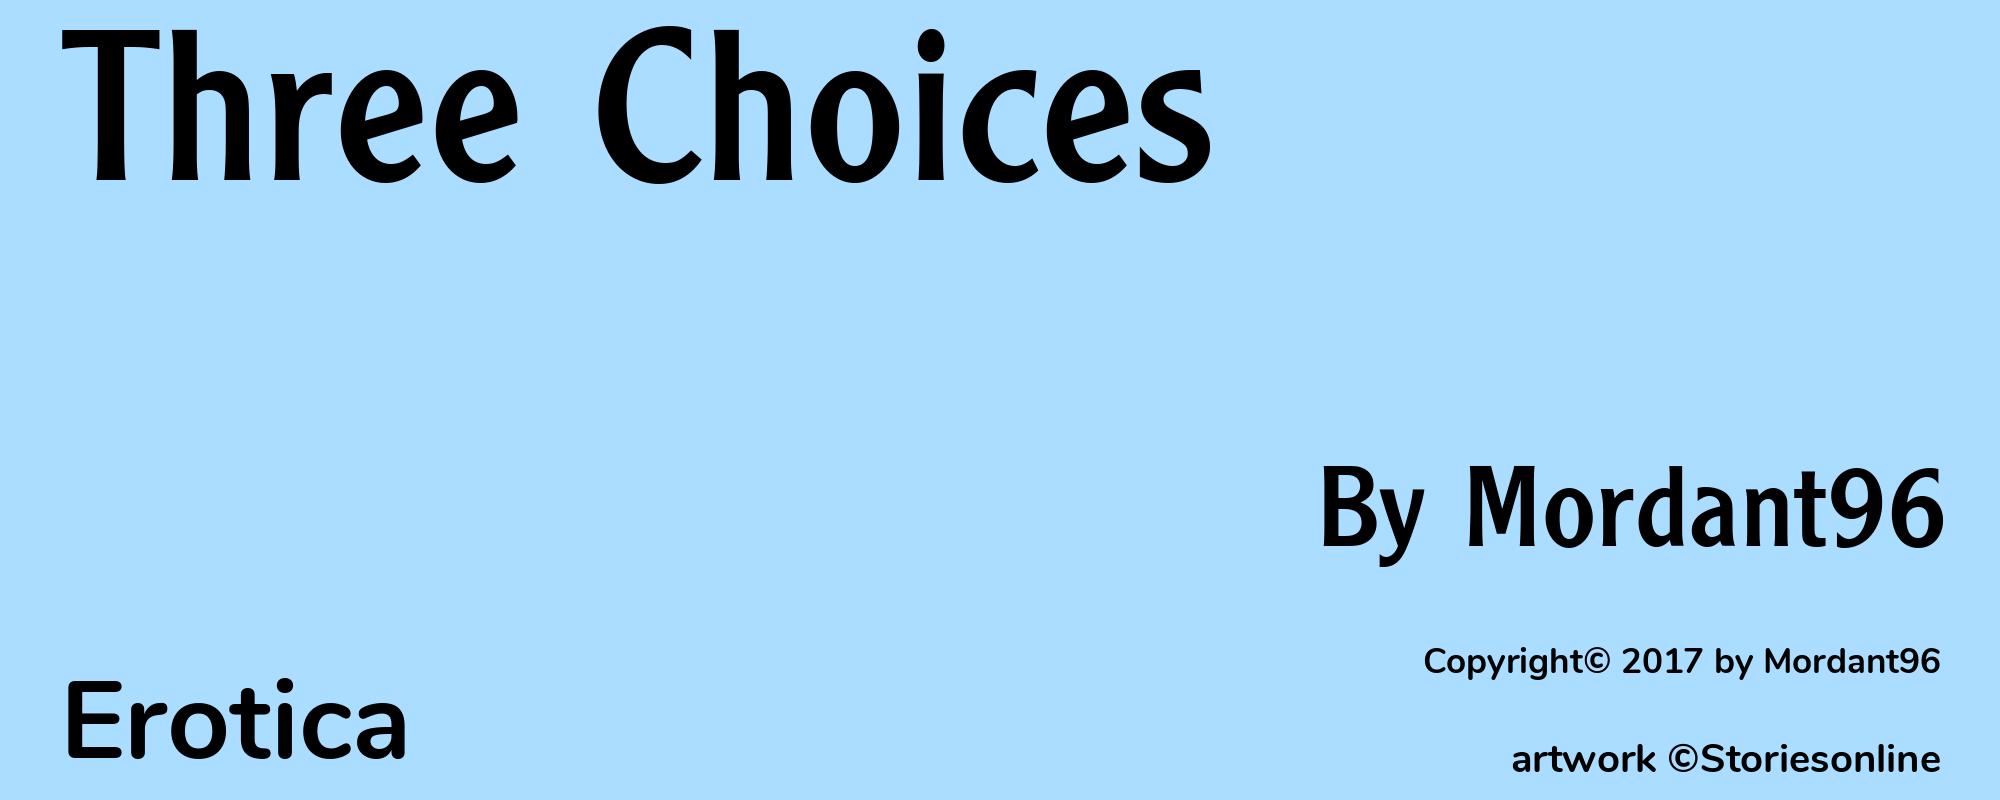 Three Choices - Cover